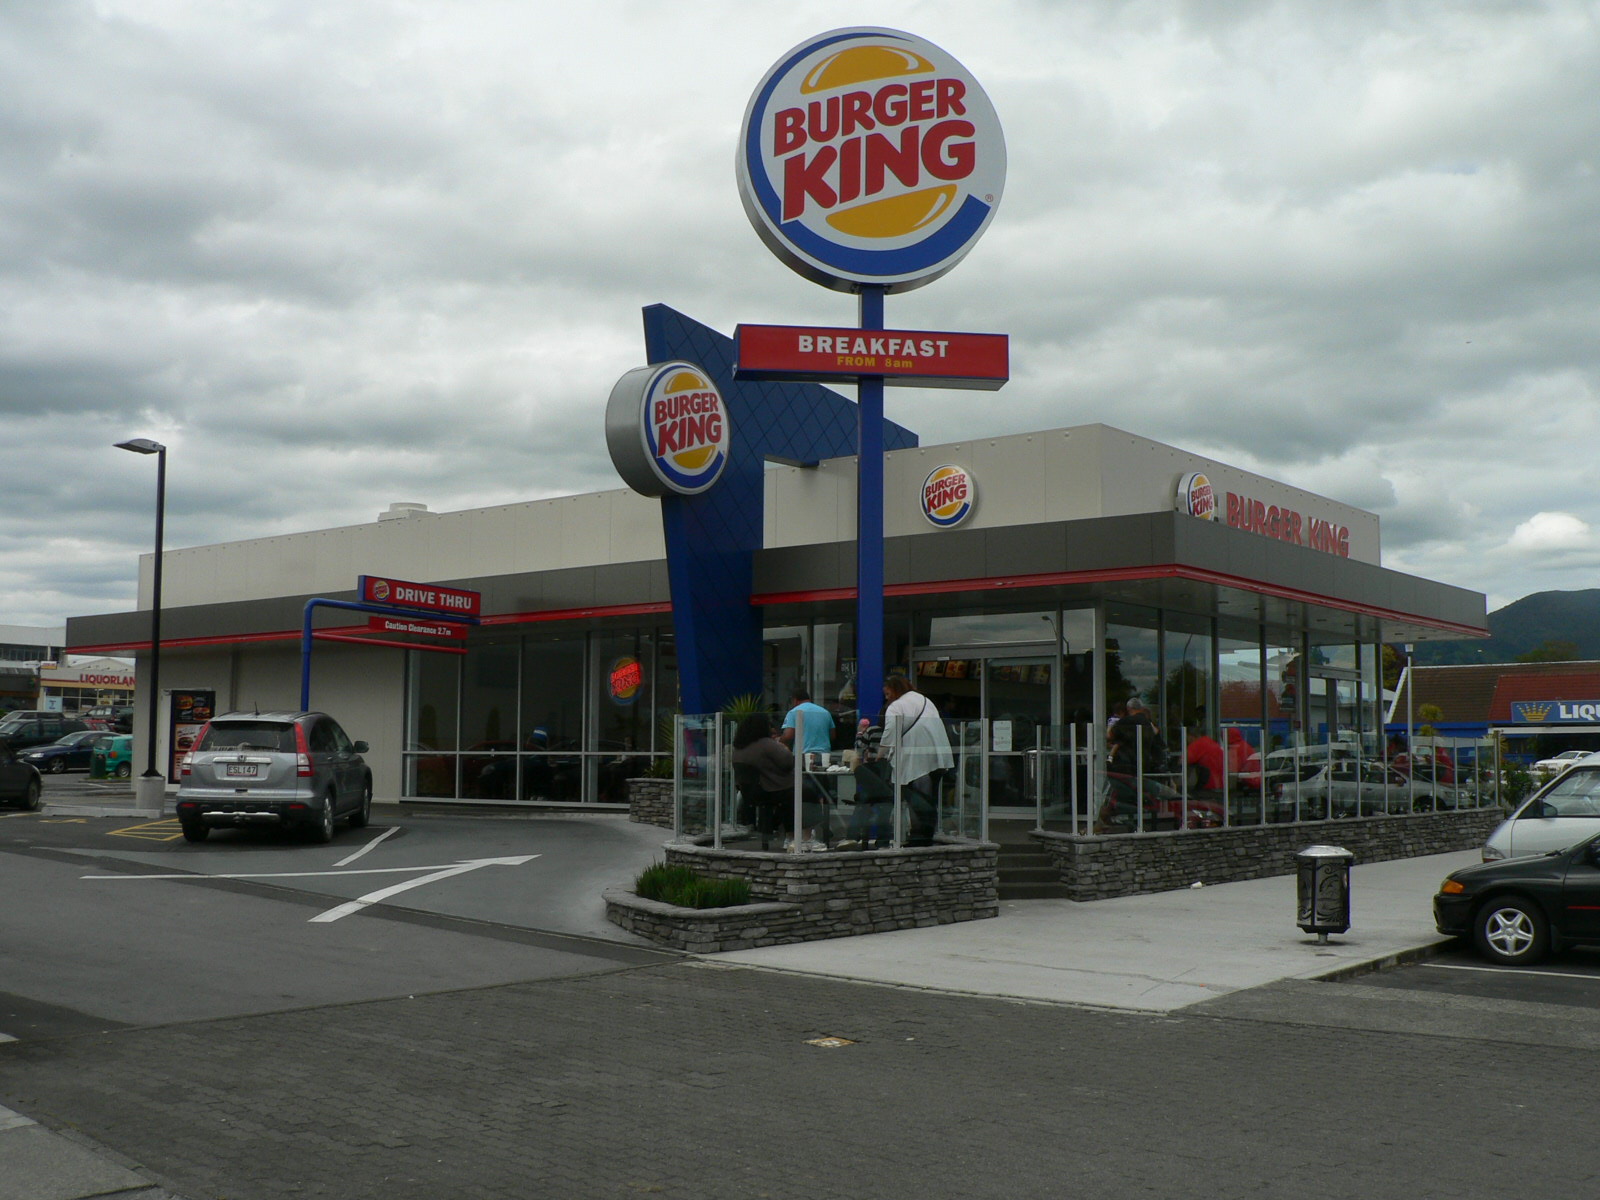 Ricerche correlate a Burger king careers nz